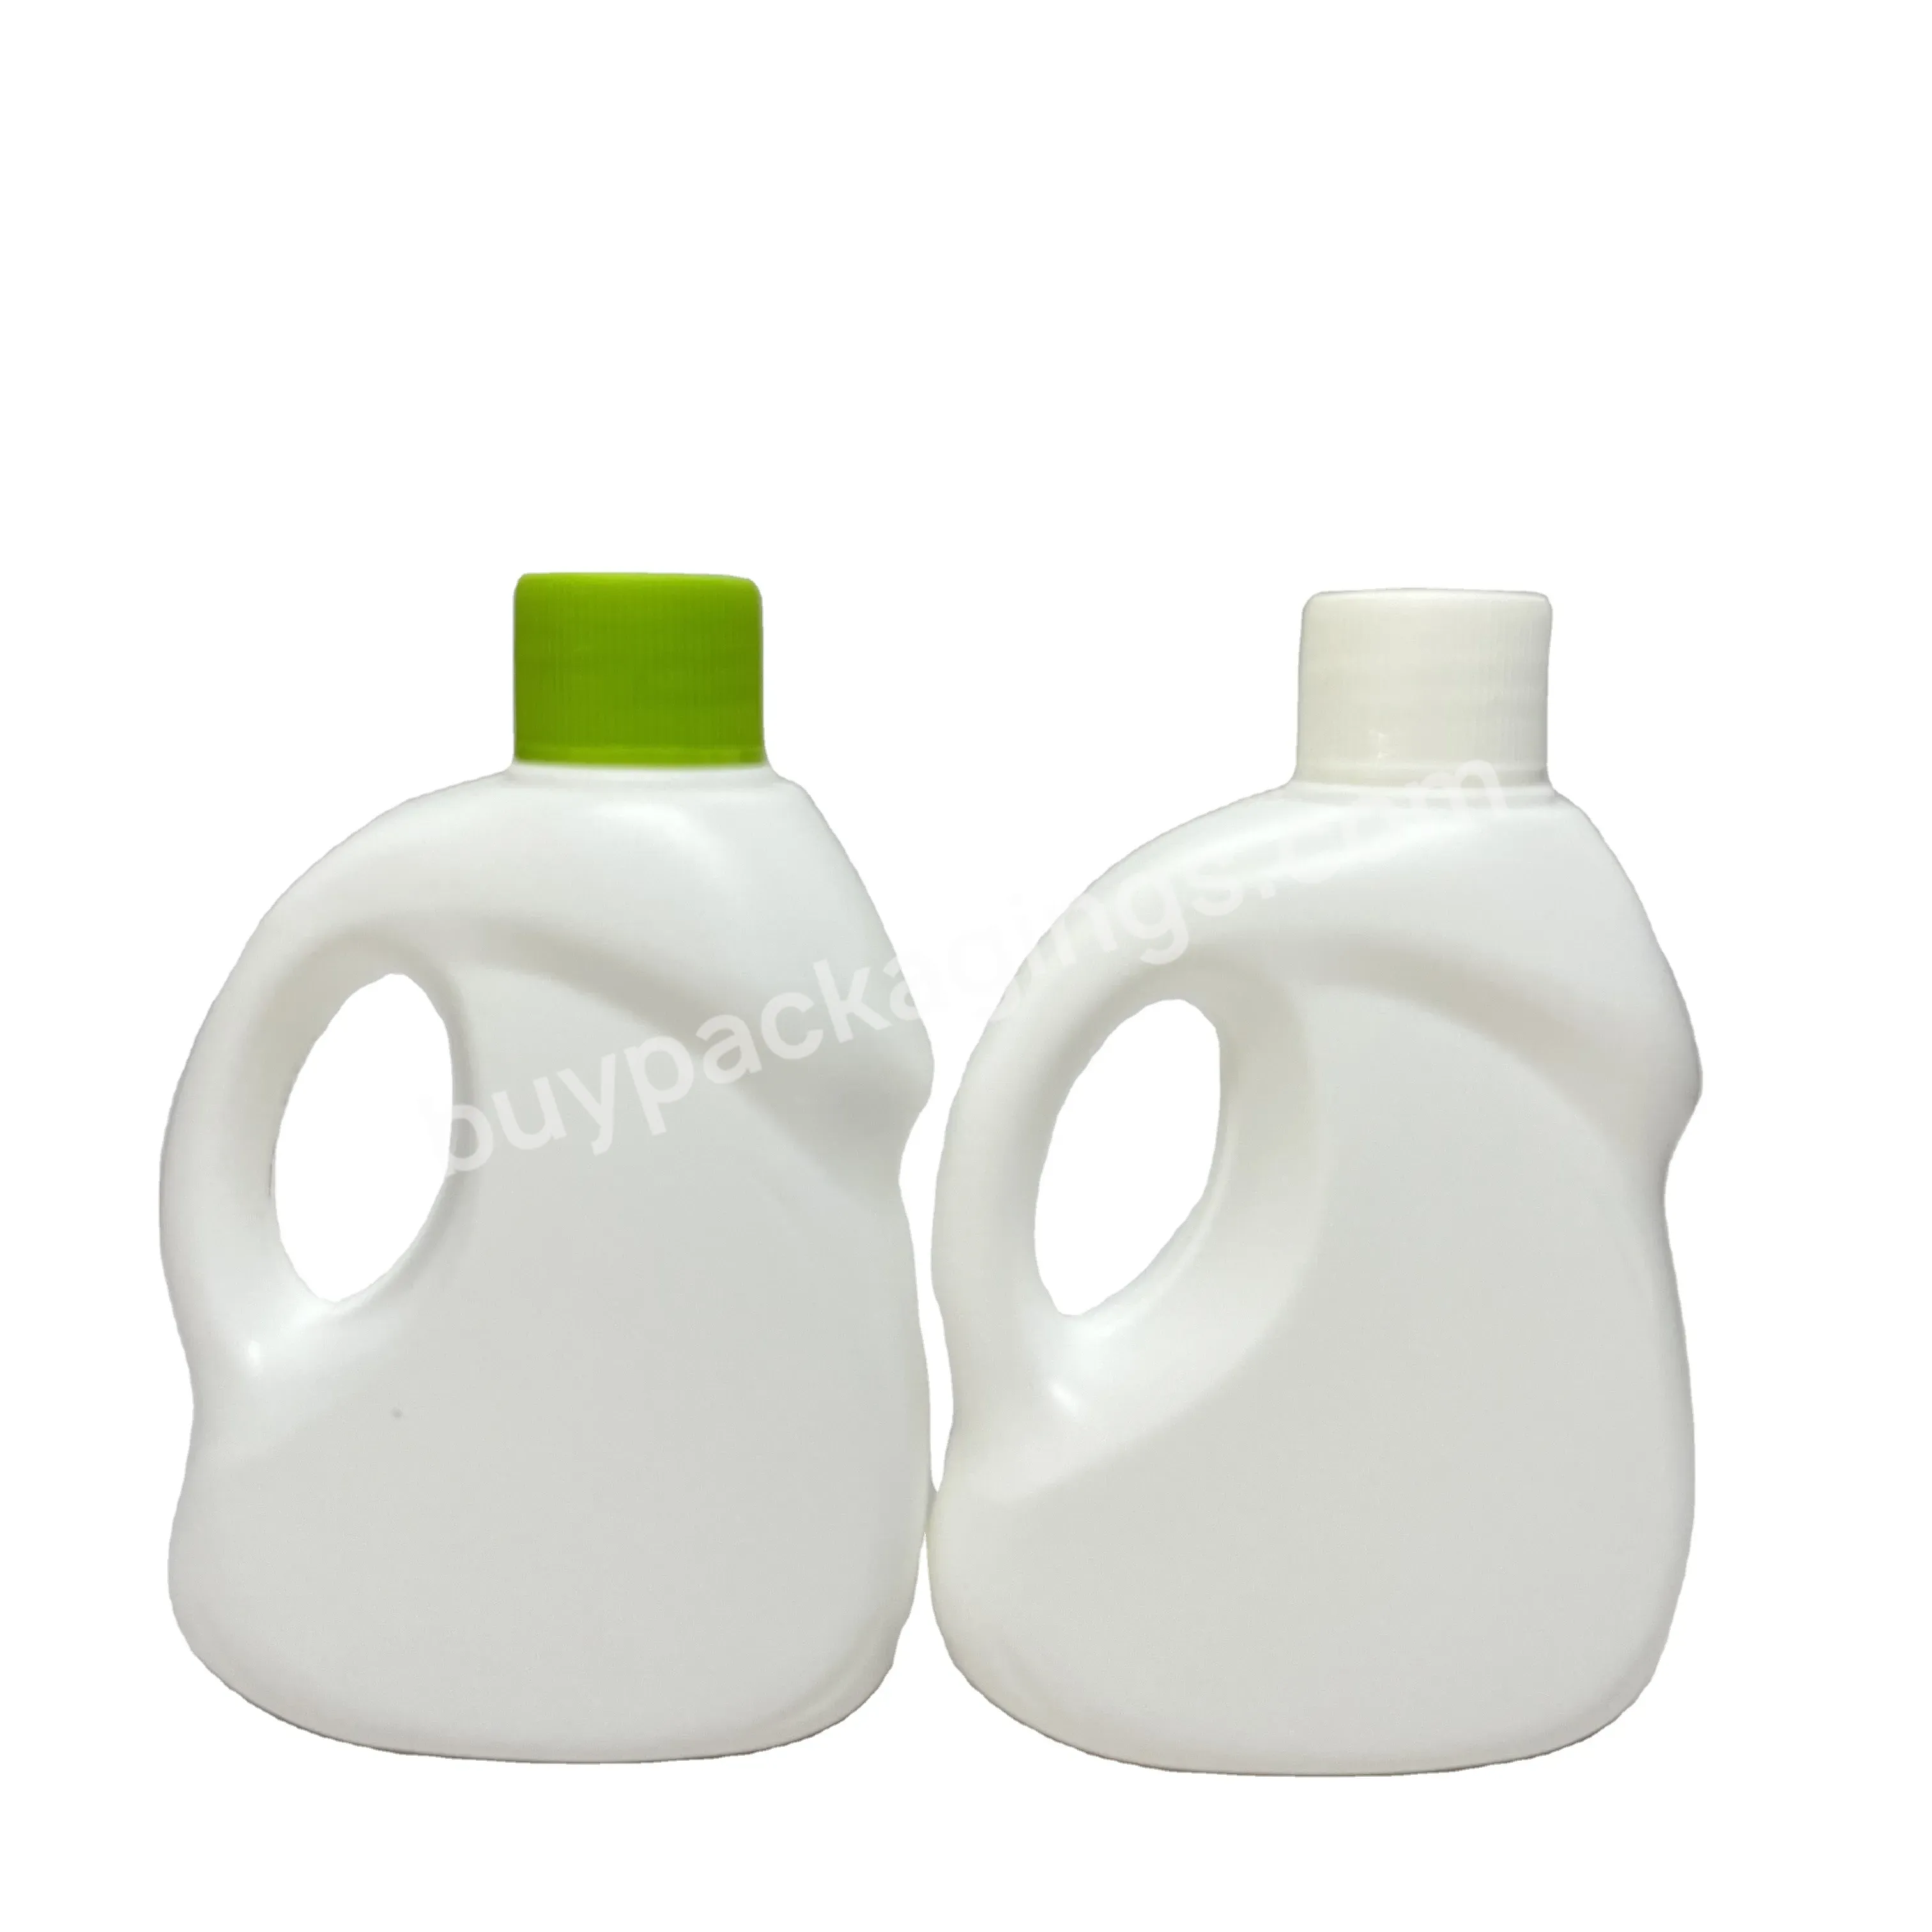 Oem Mini 100ml Hdpe Plastic Liquid Laundry Detergent Bottle With Screw Lid Portable Travel Detergent Bottle Wholesale